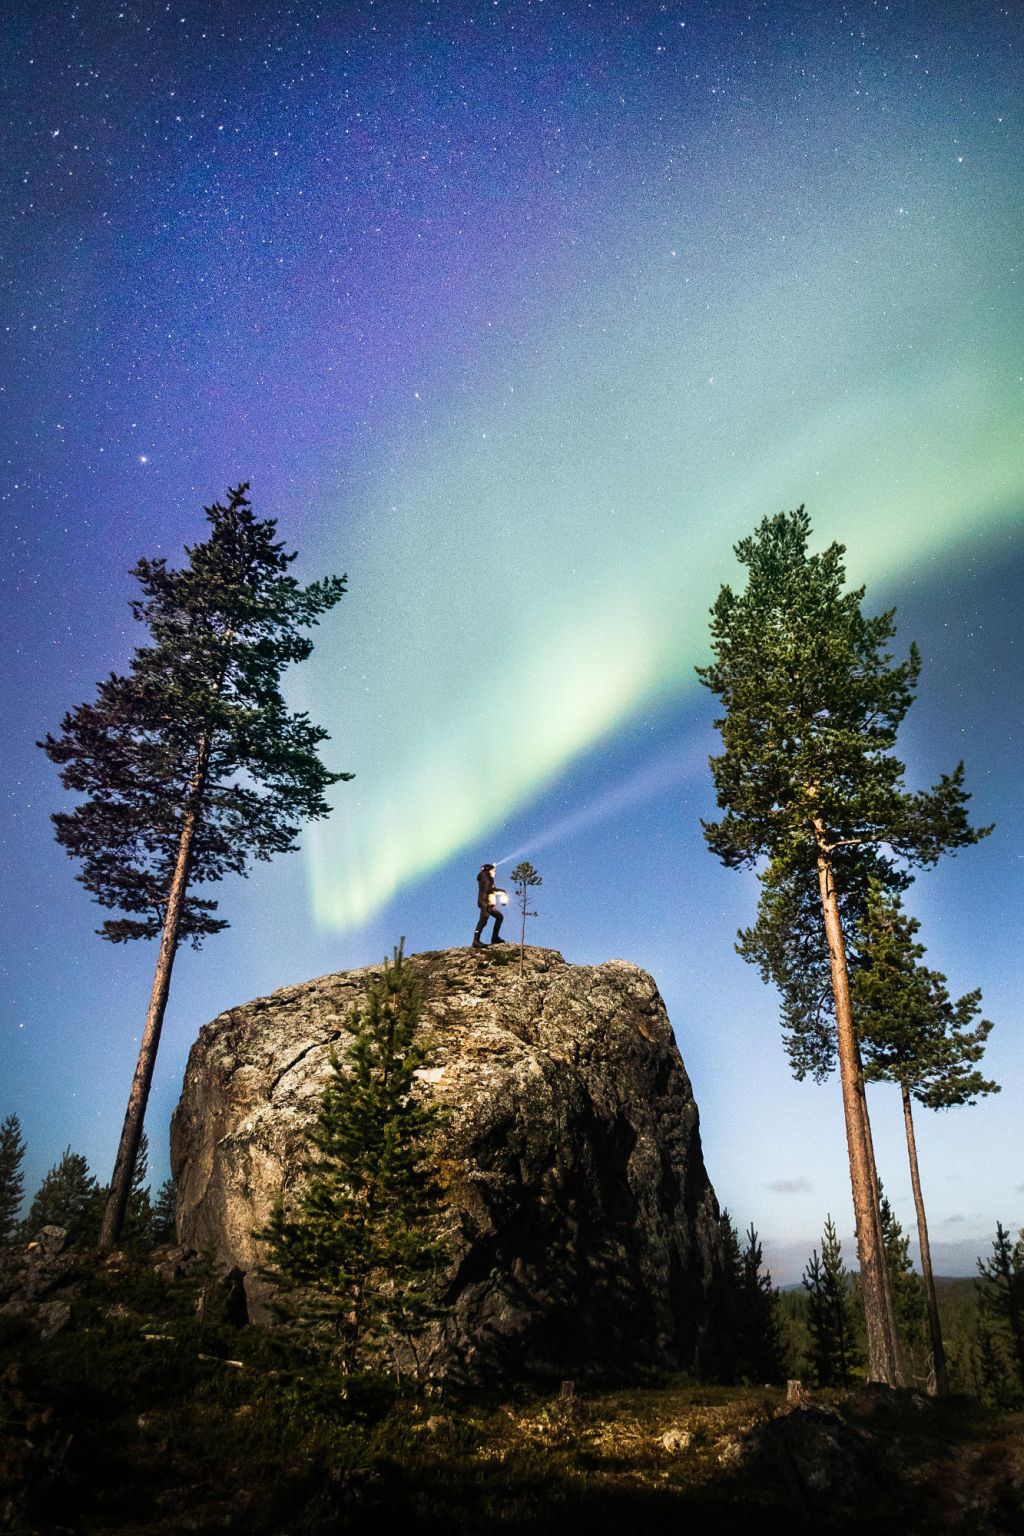 Northern Lights photographer, Alexander Kuznetsov